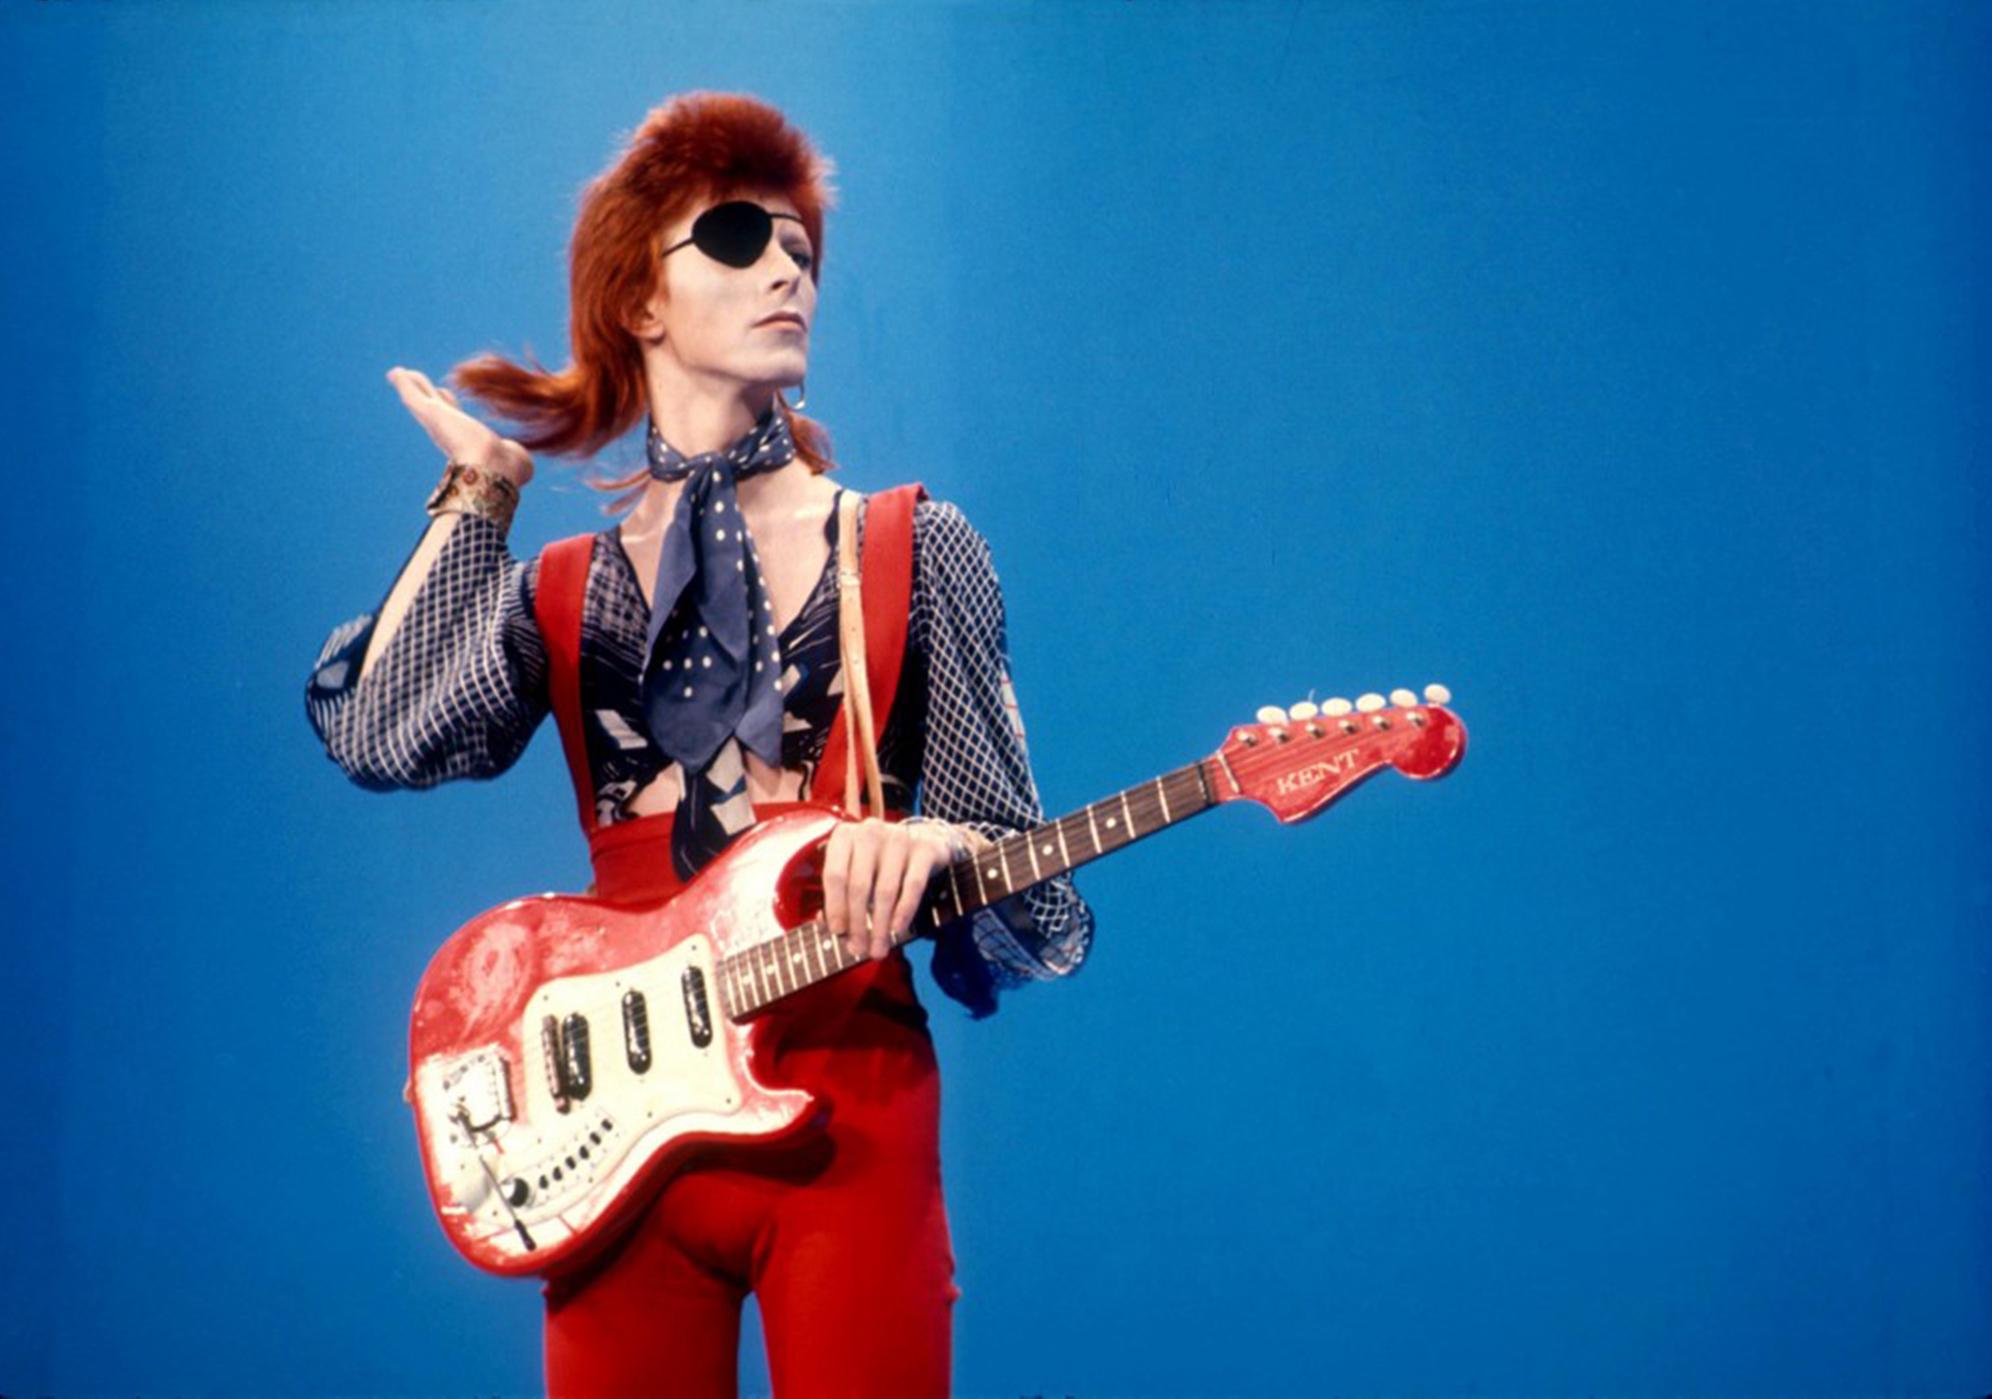 David Bowie "Rebel Rebel"